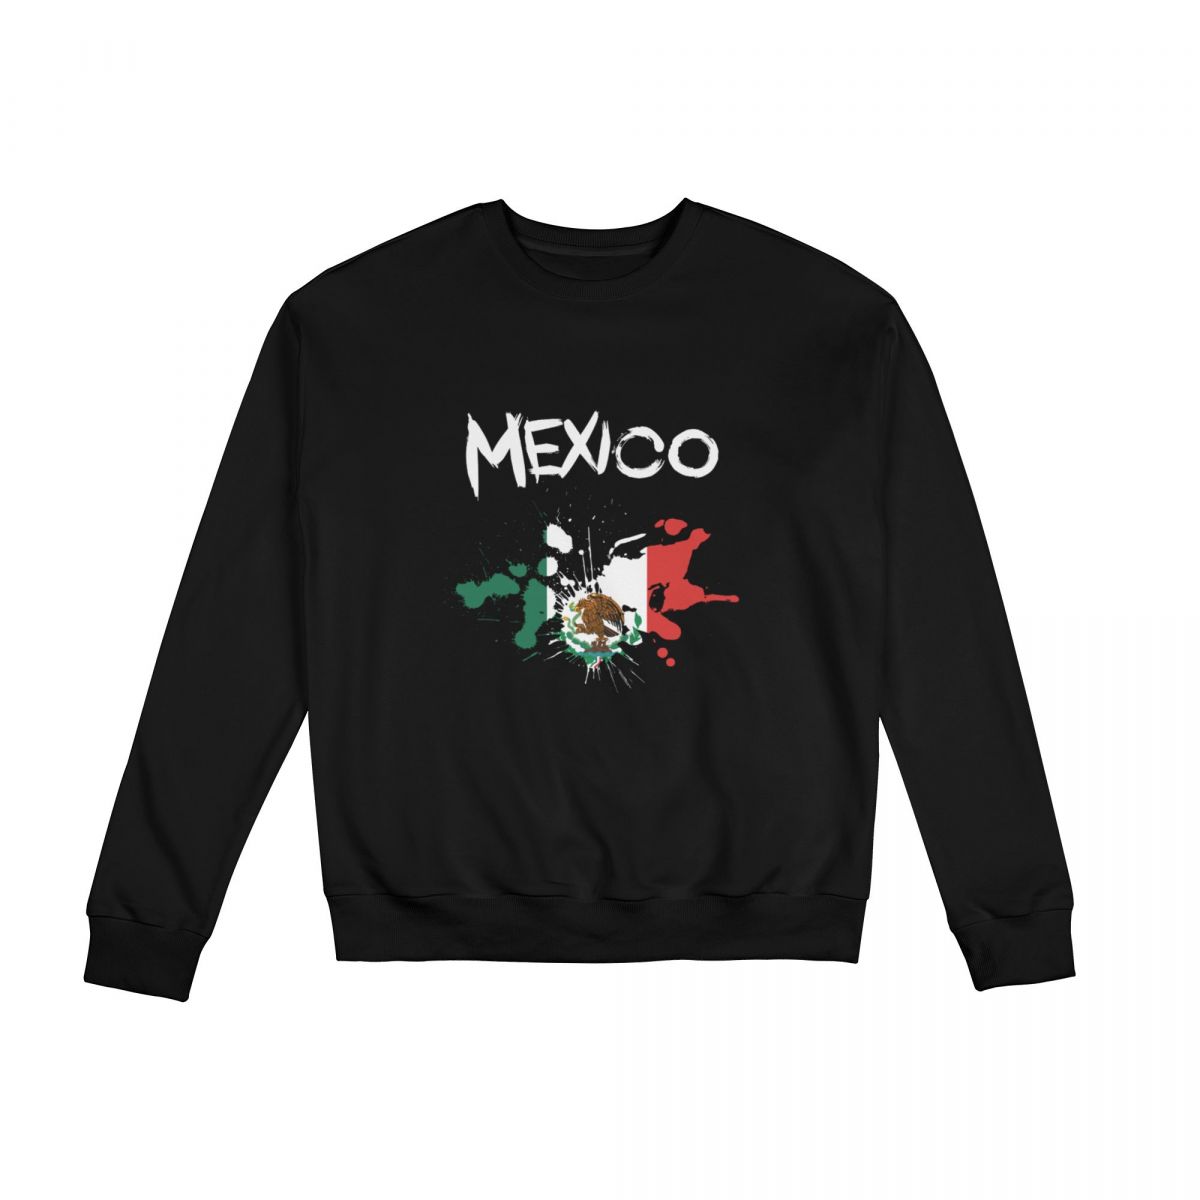 Mexico Ink Spatter Crew Neck Sweatshirt